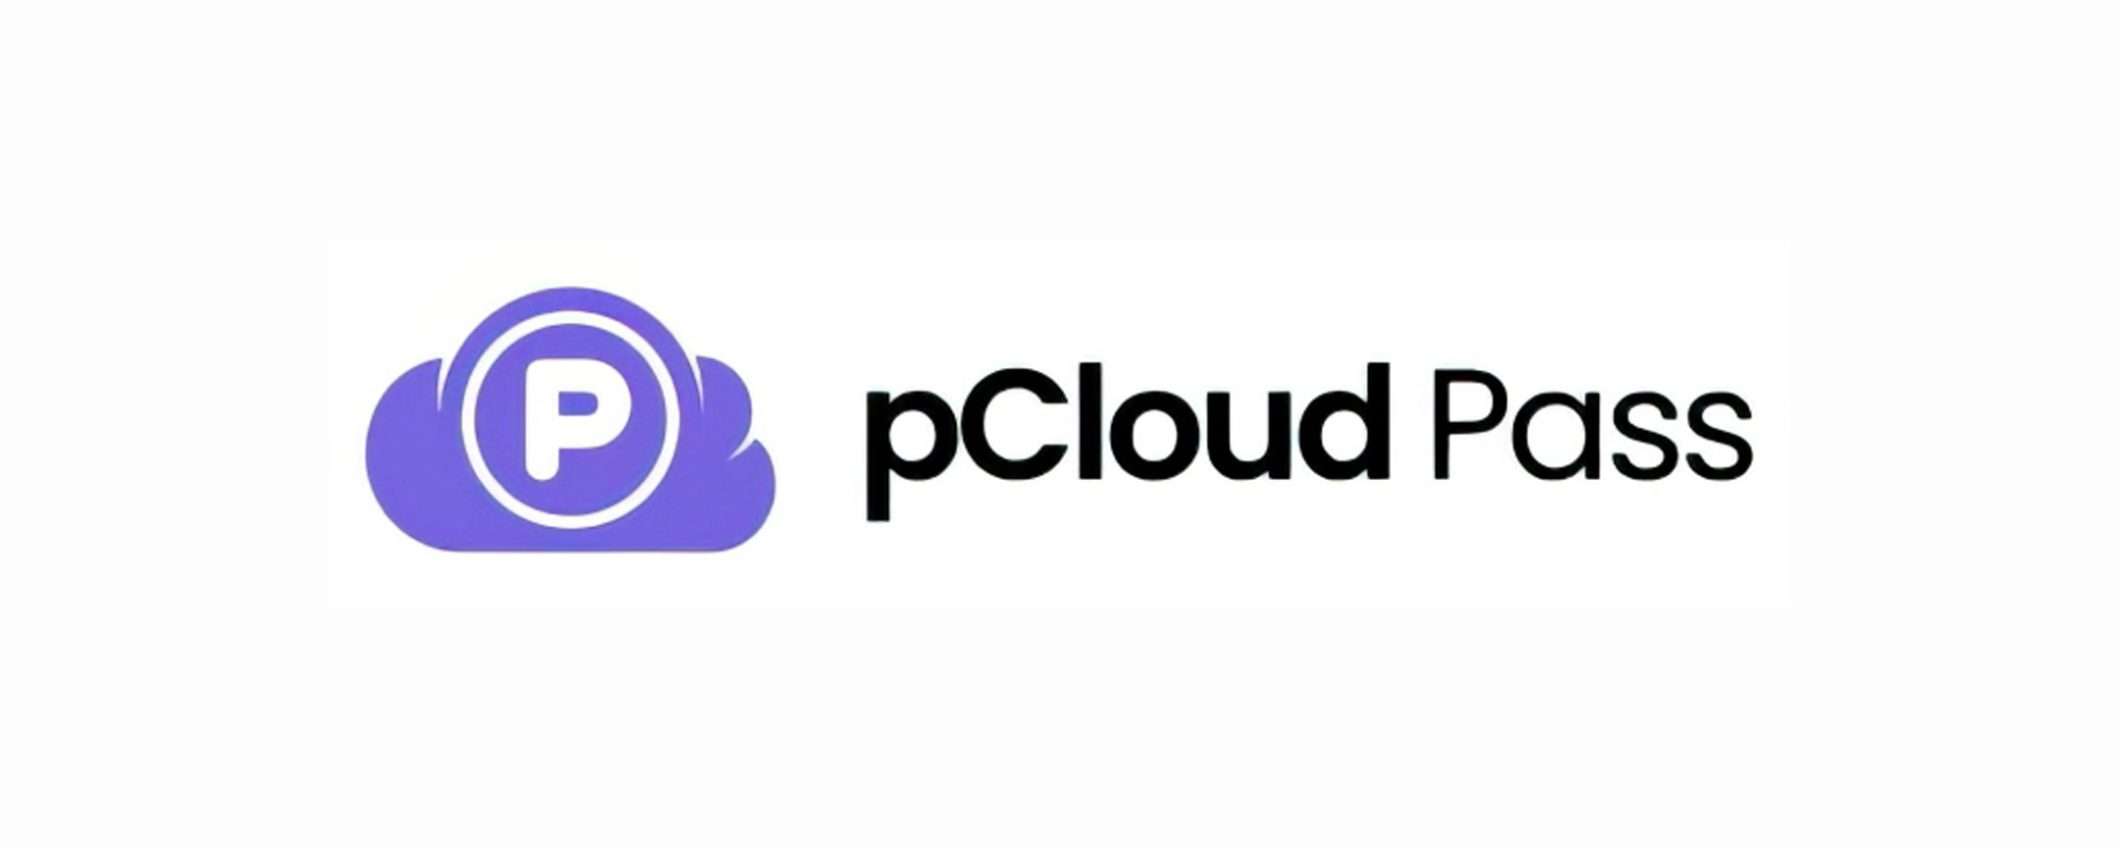 pCloud Pass è davvero il password manager più sicuro?